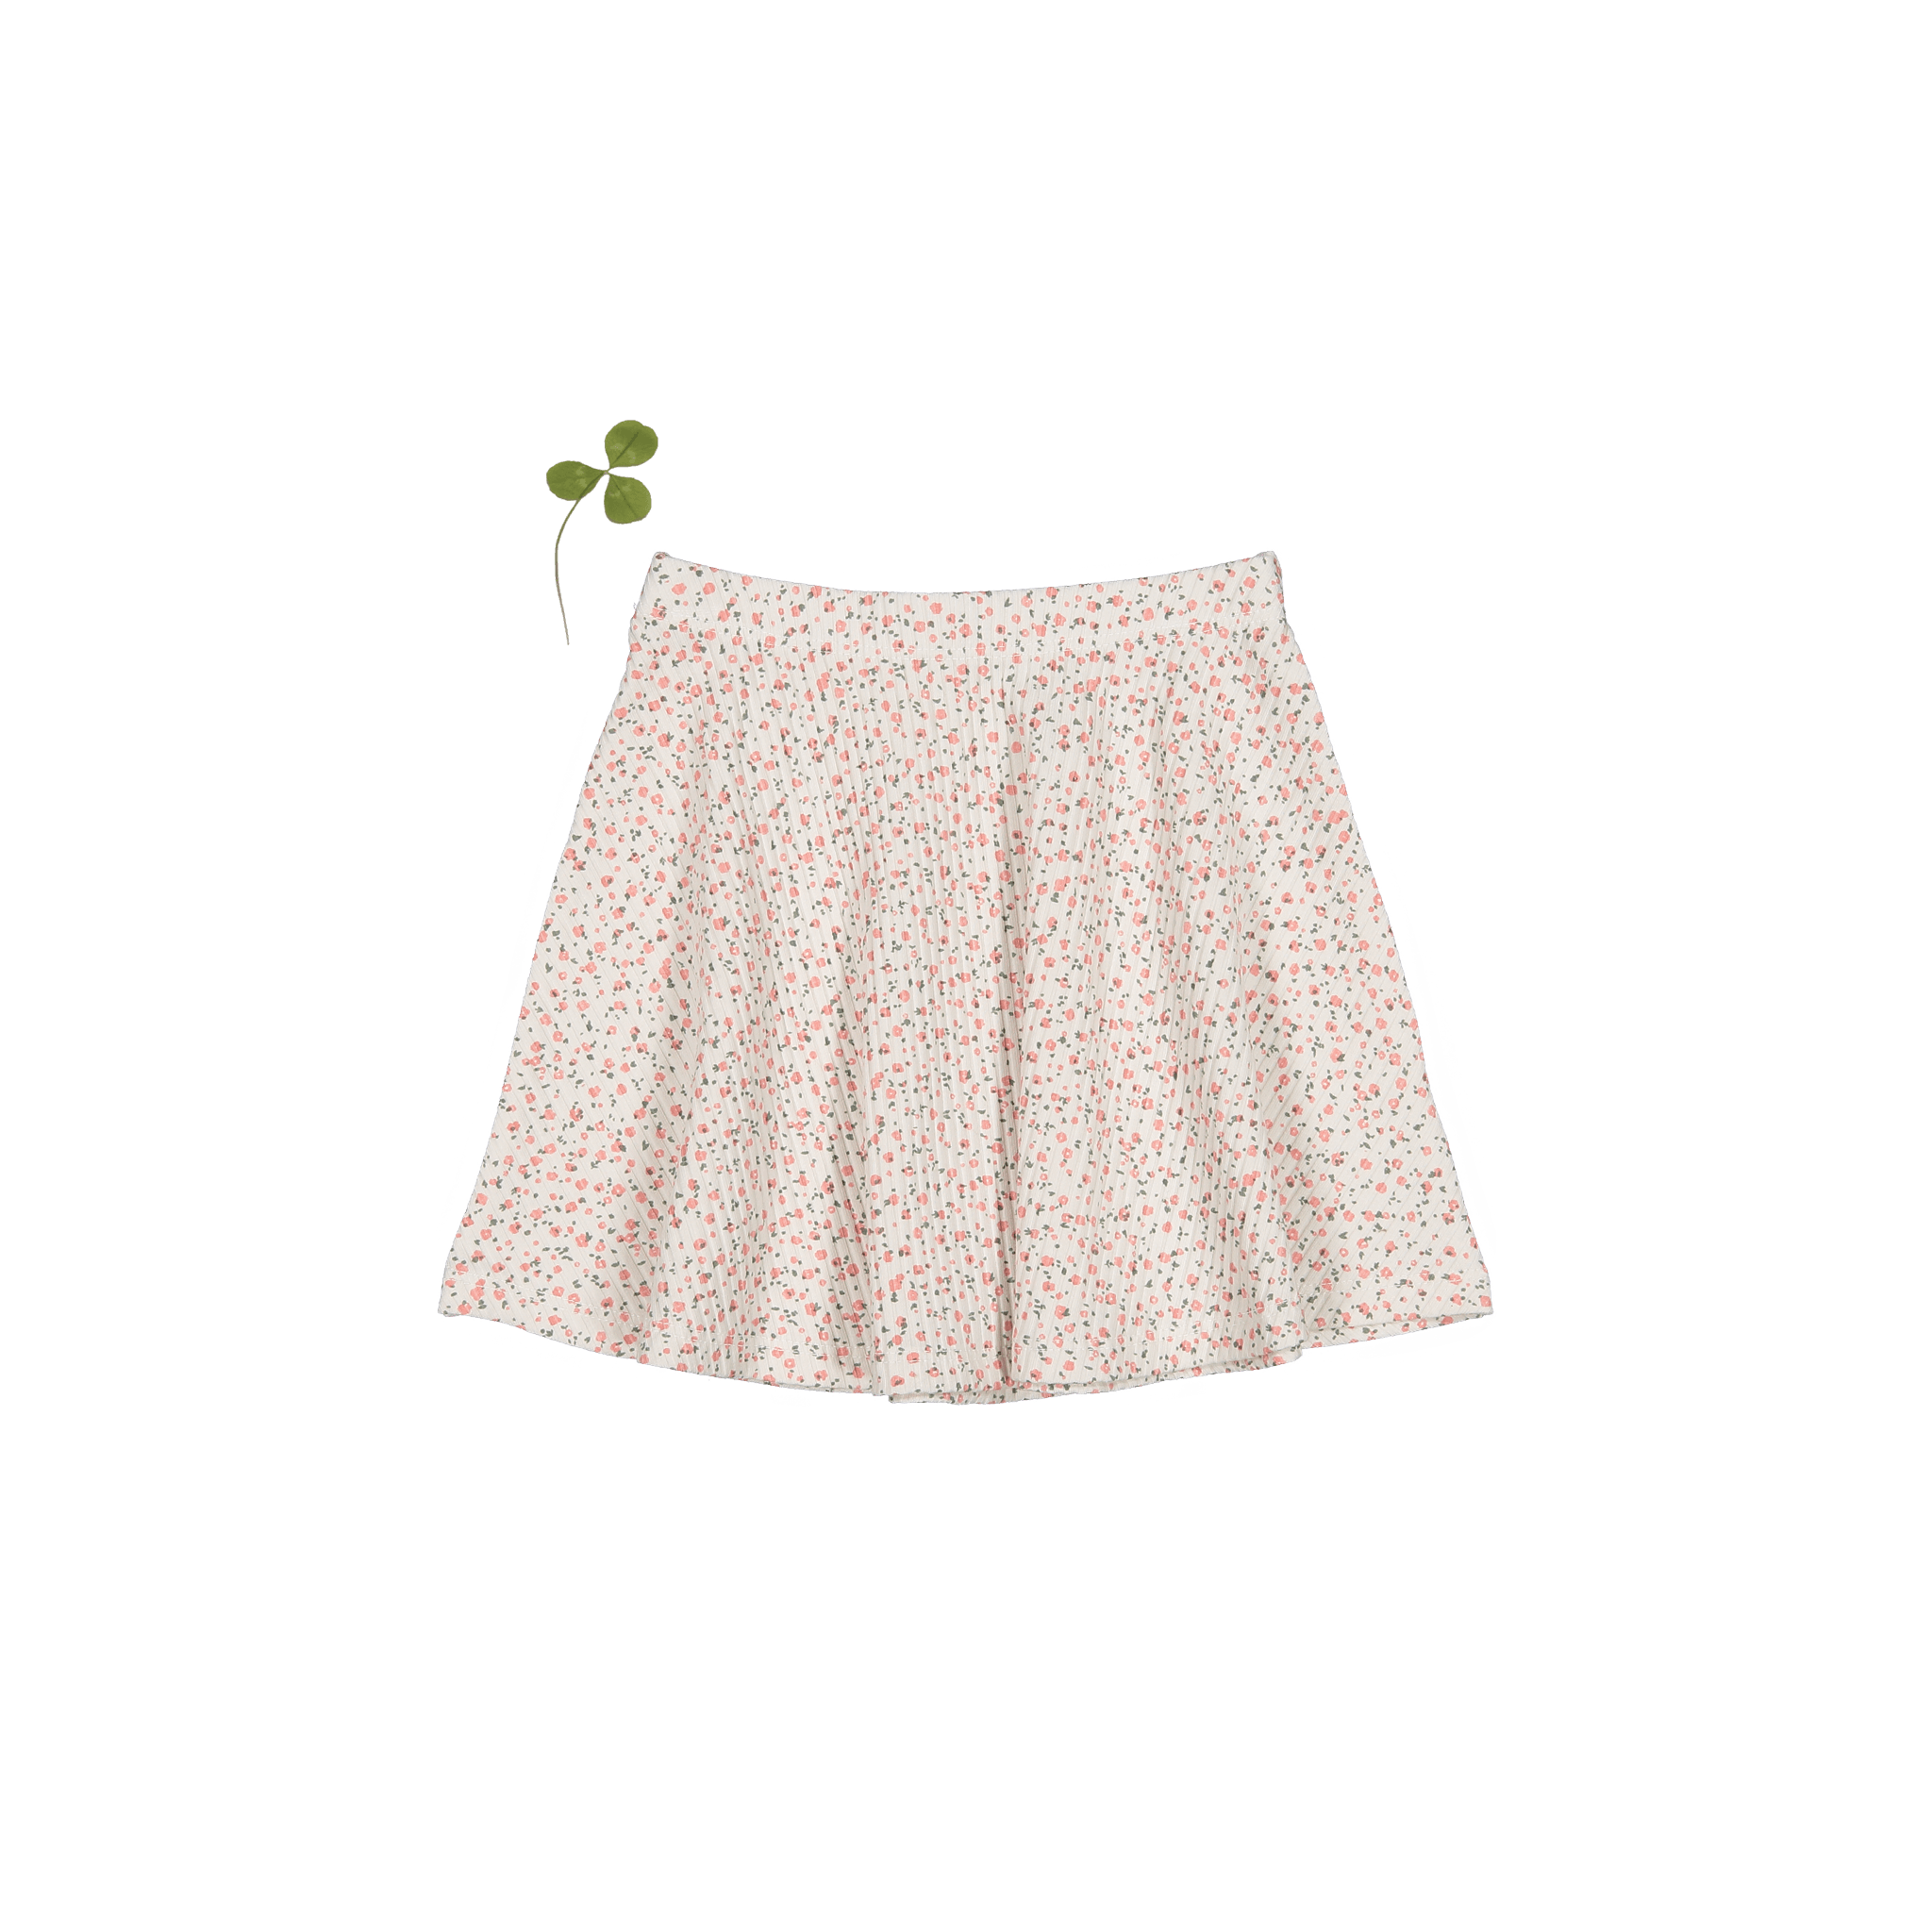 The Printed Skirt - Pearl Bud